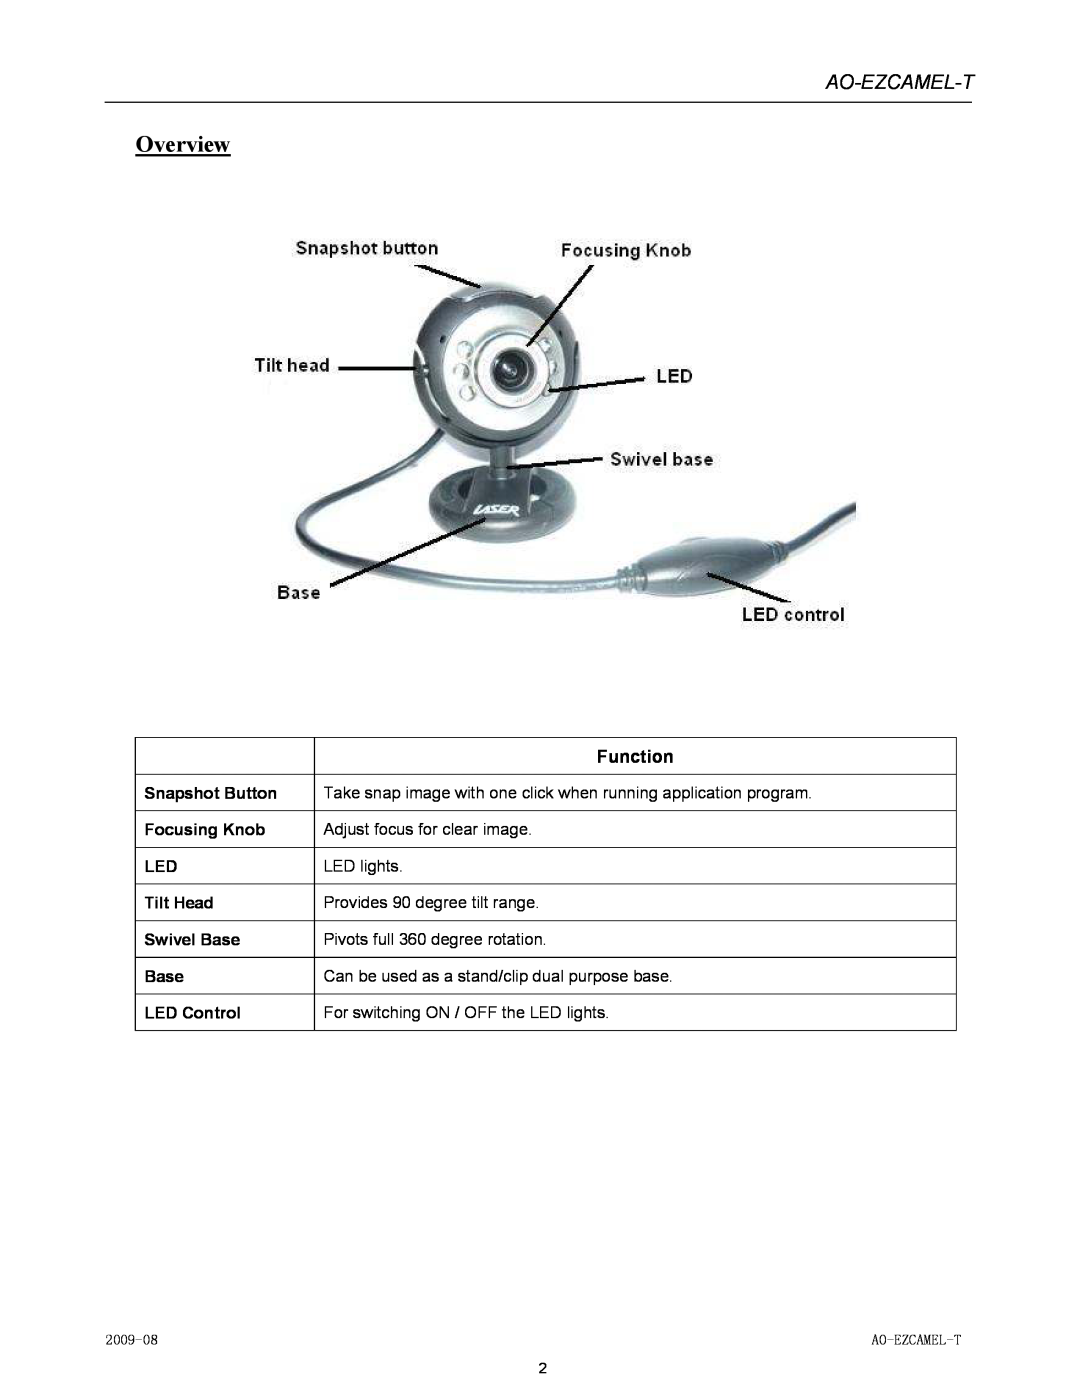 Laser AO-EZCAMEL-T manual Overview, Ao-Ezcamel-T, Function 